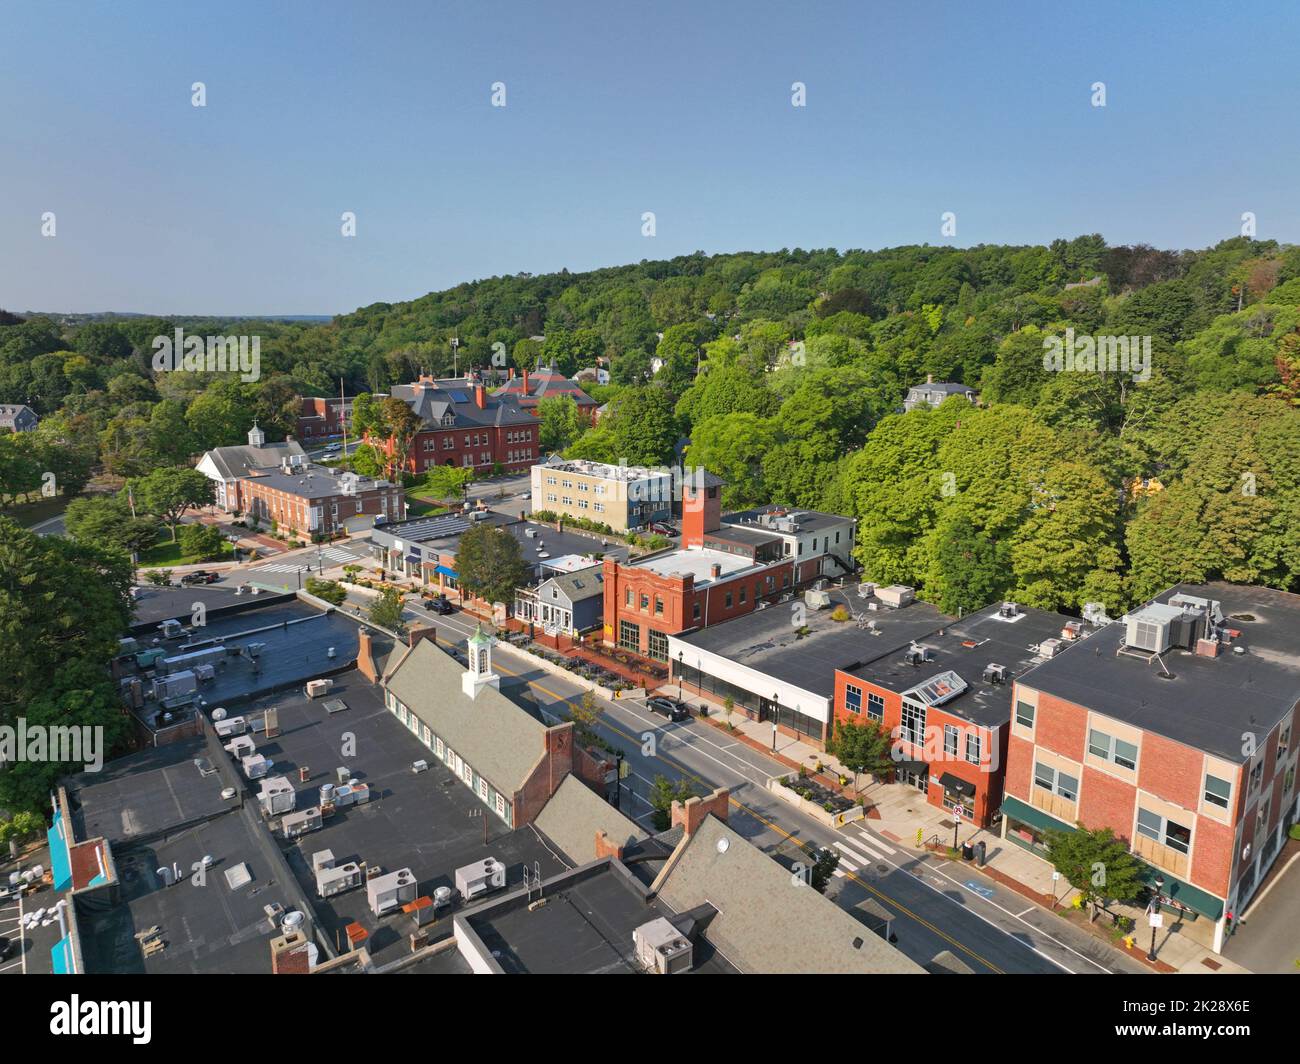 Belmont commercial center Leonard Street aerial view in historic center of Belmont, Massachusetts MA, USA. Stock Photo